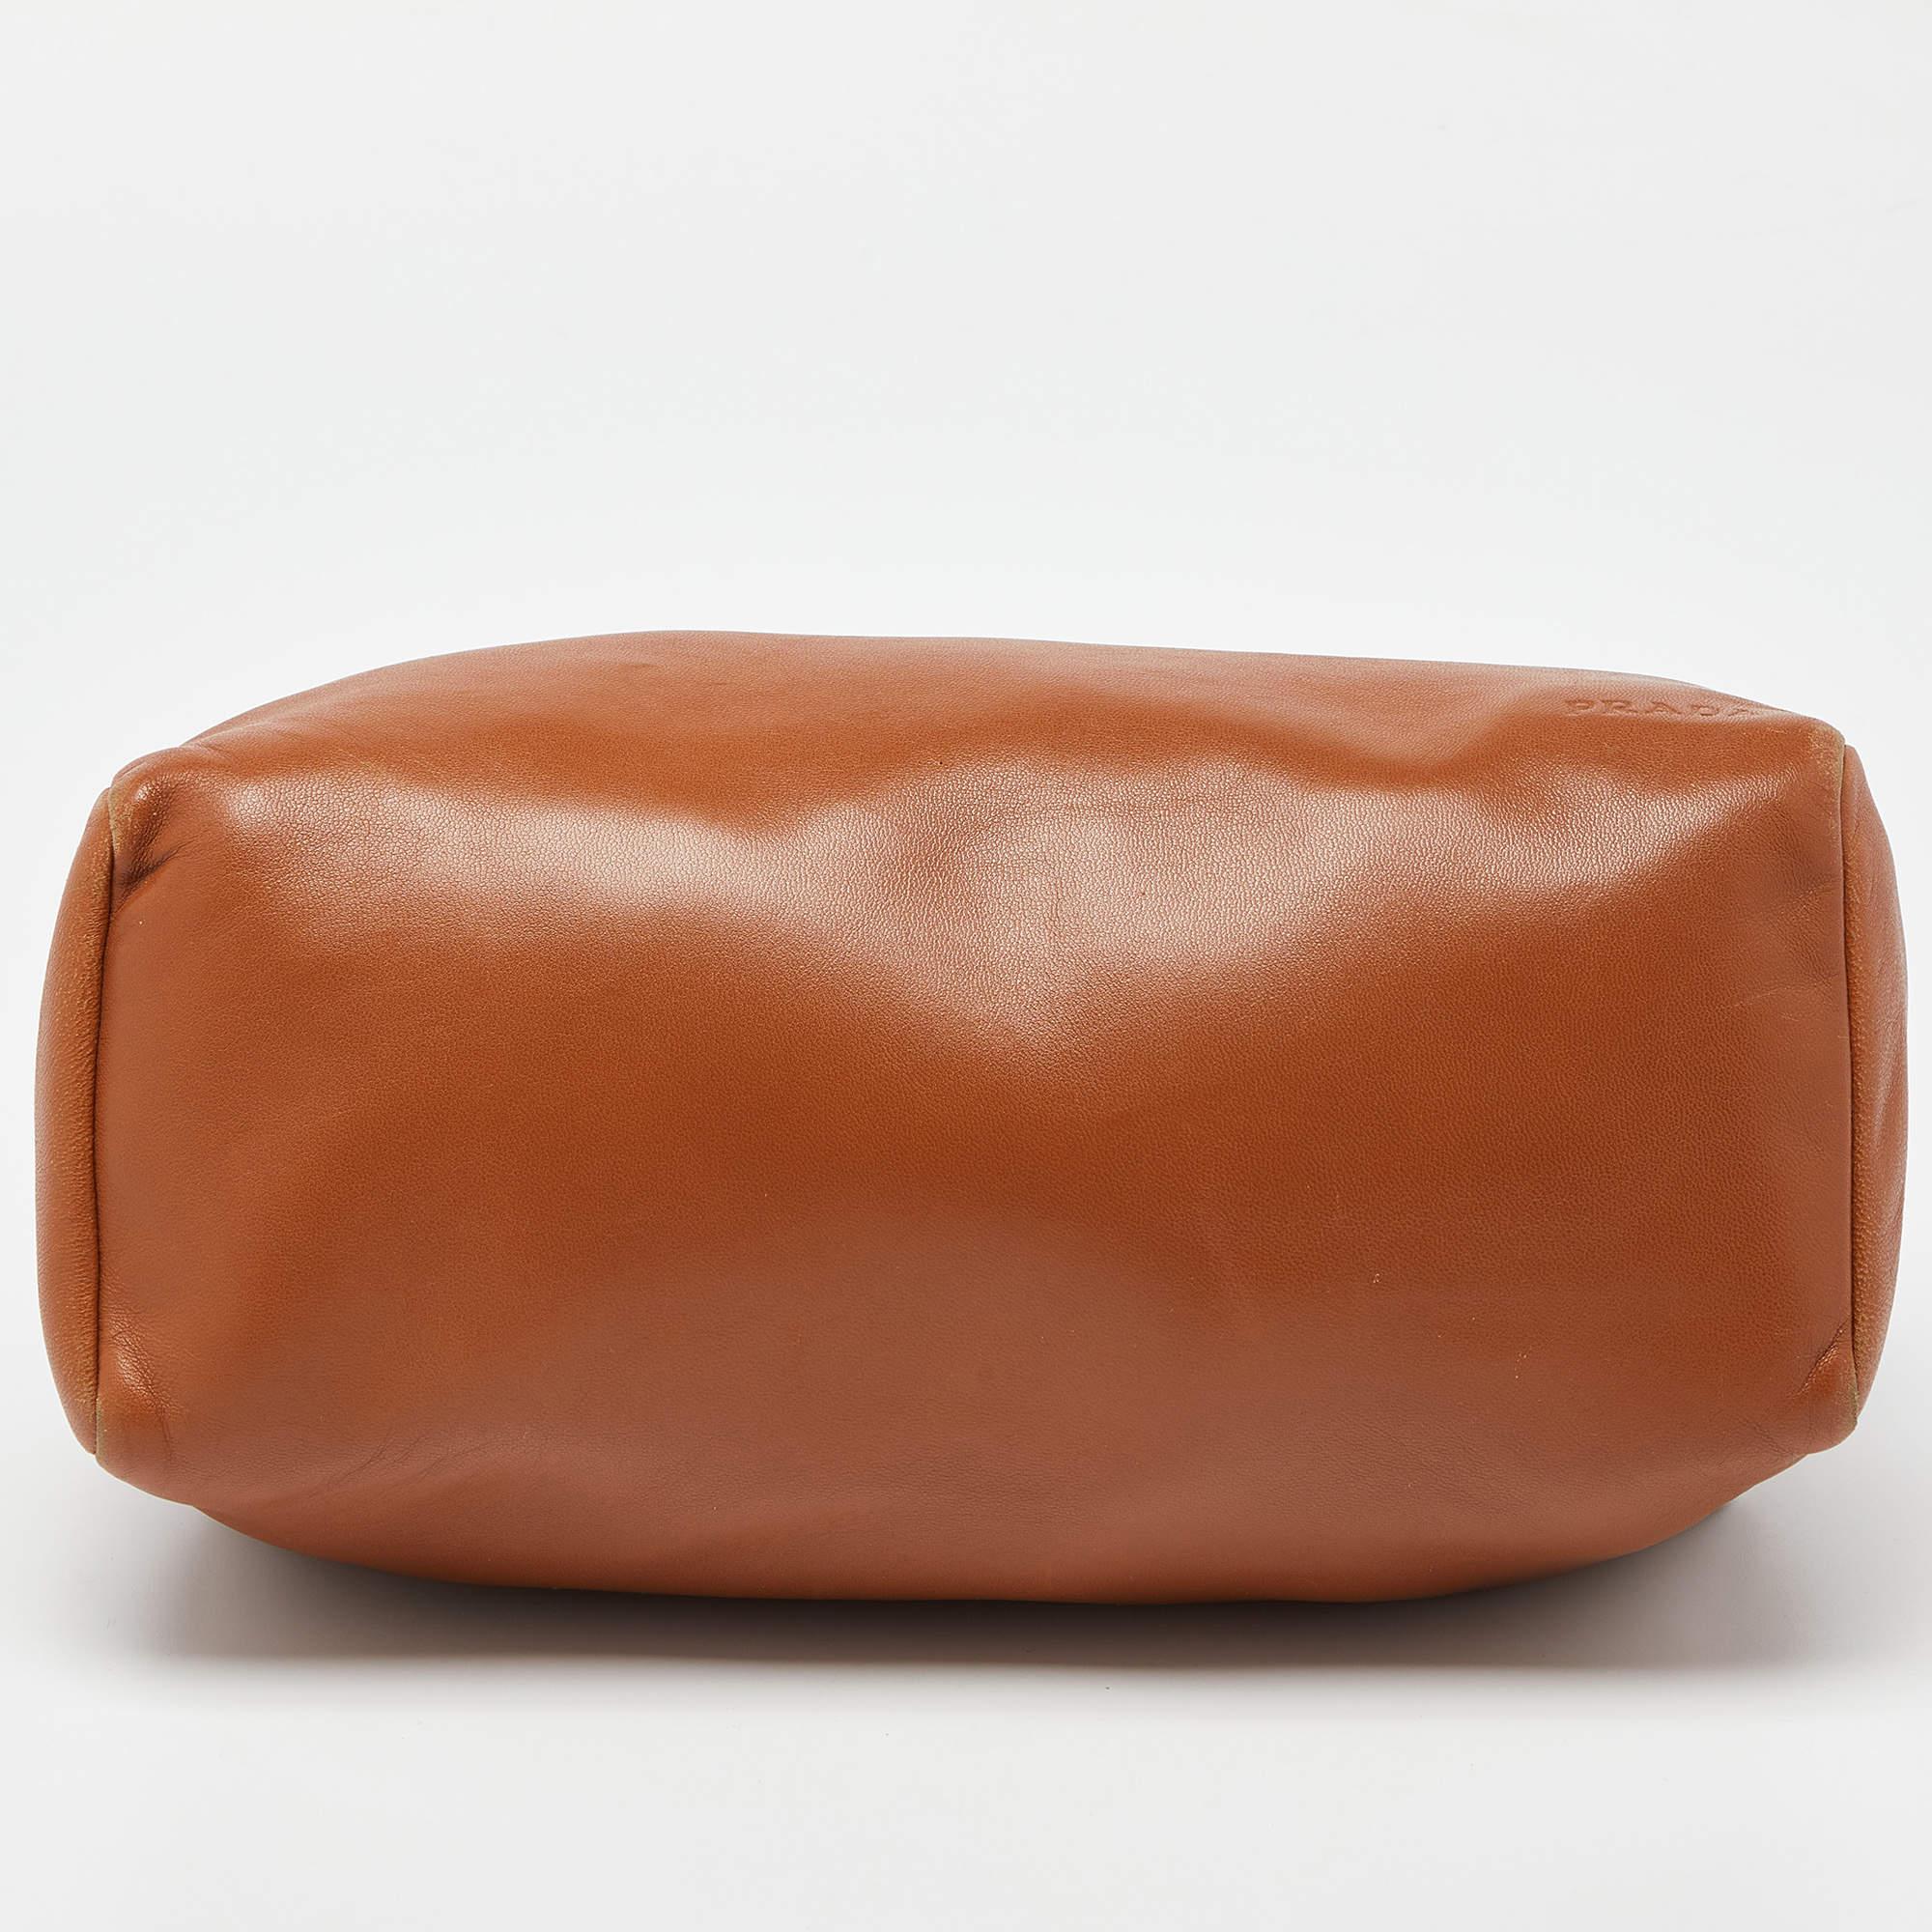 Prada Tan/Orange Leather Satchel For Sale 1